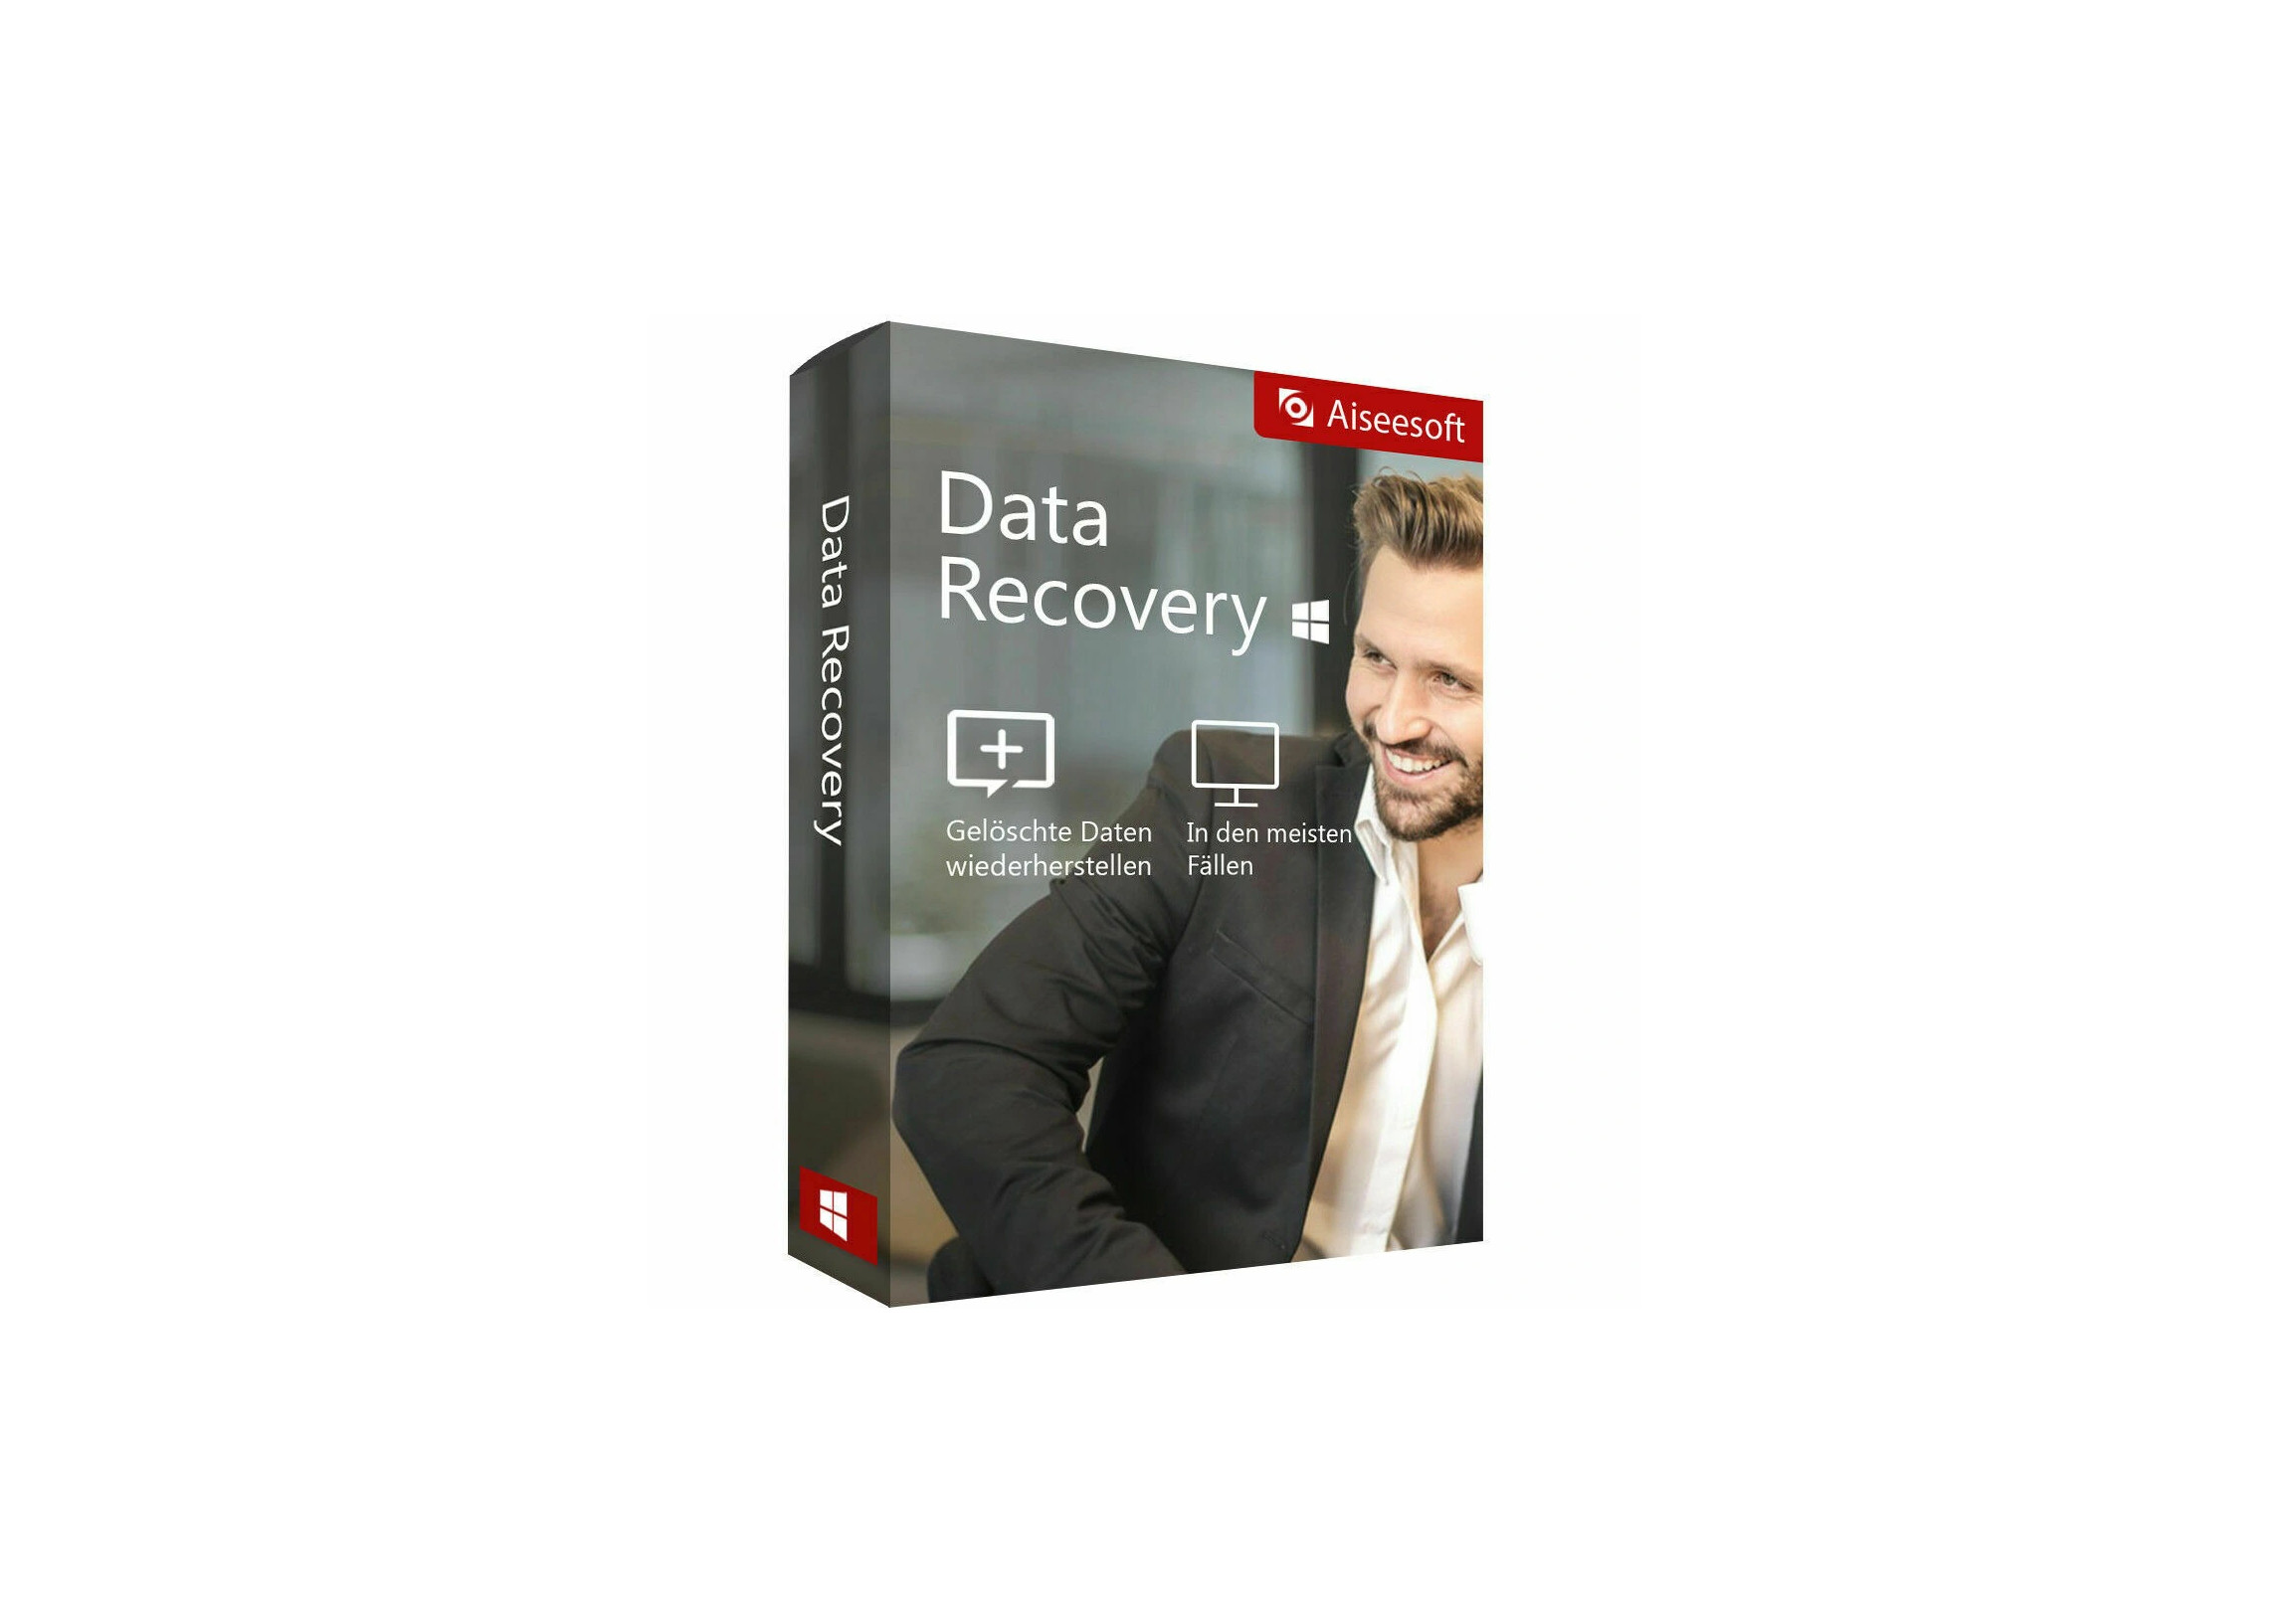 Aiseesoft Data Recovery Key (1 Year / 1 PC), $2.25